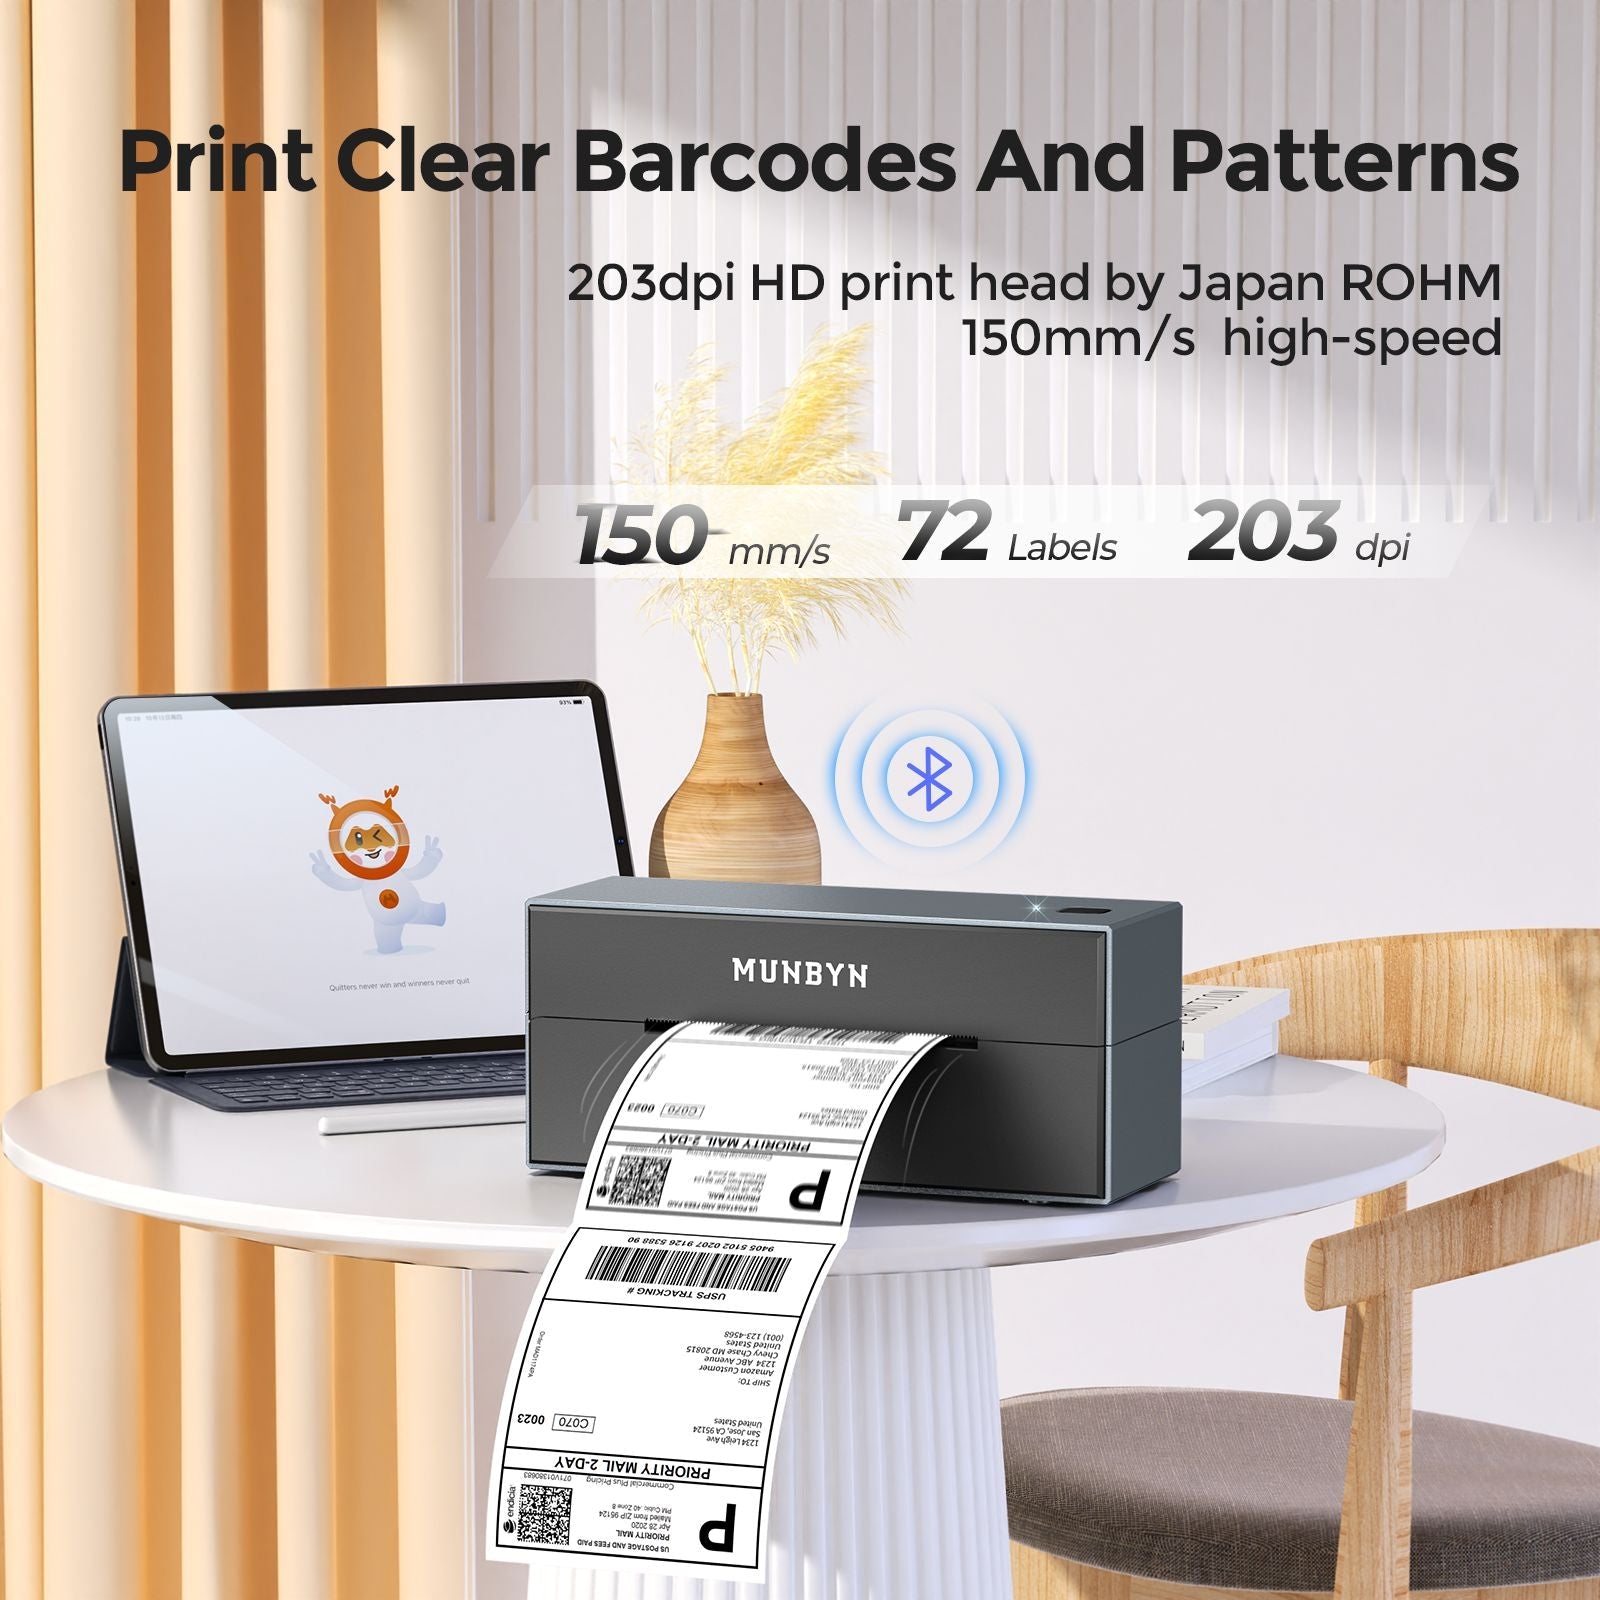 MUNBYN wireless Bluetooth label printer is a 203 dpi high-speed label printer